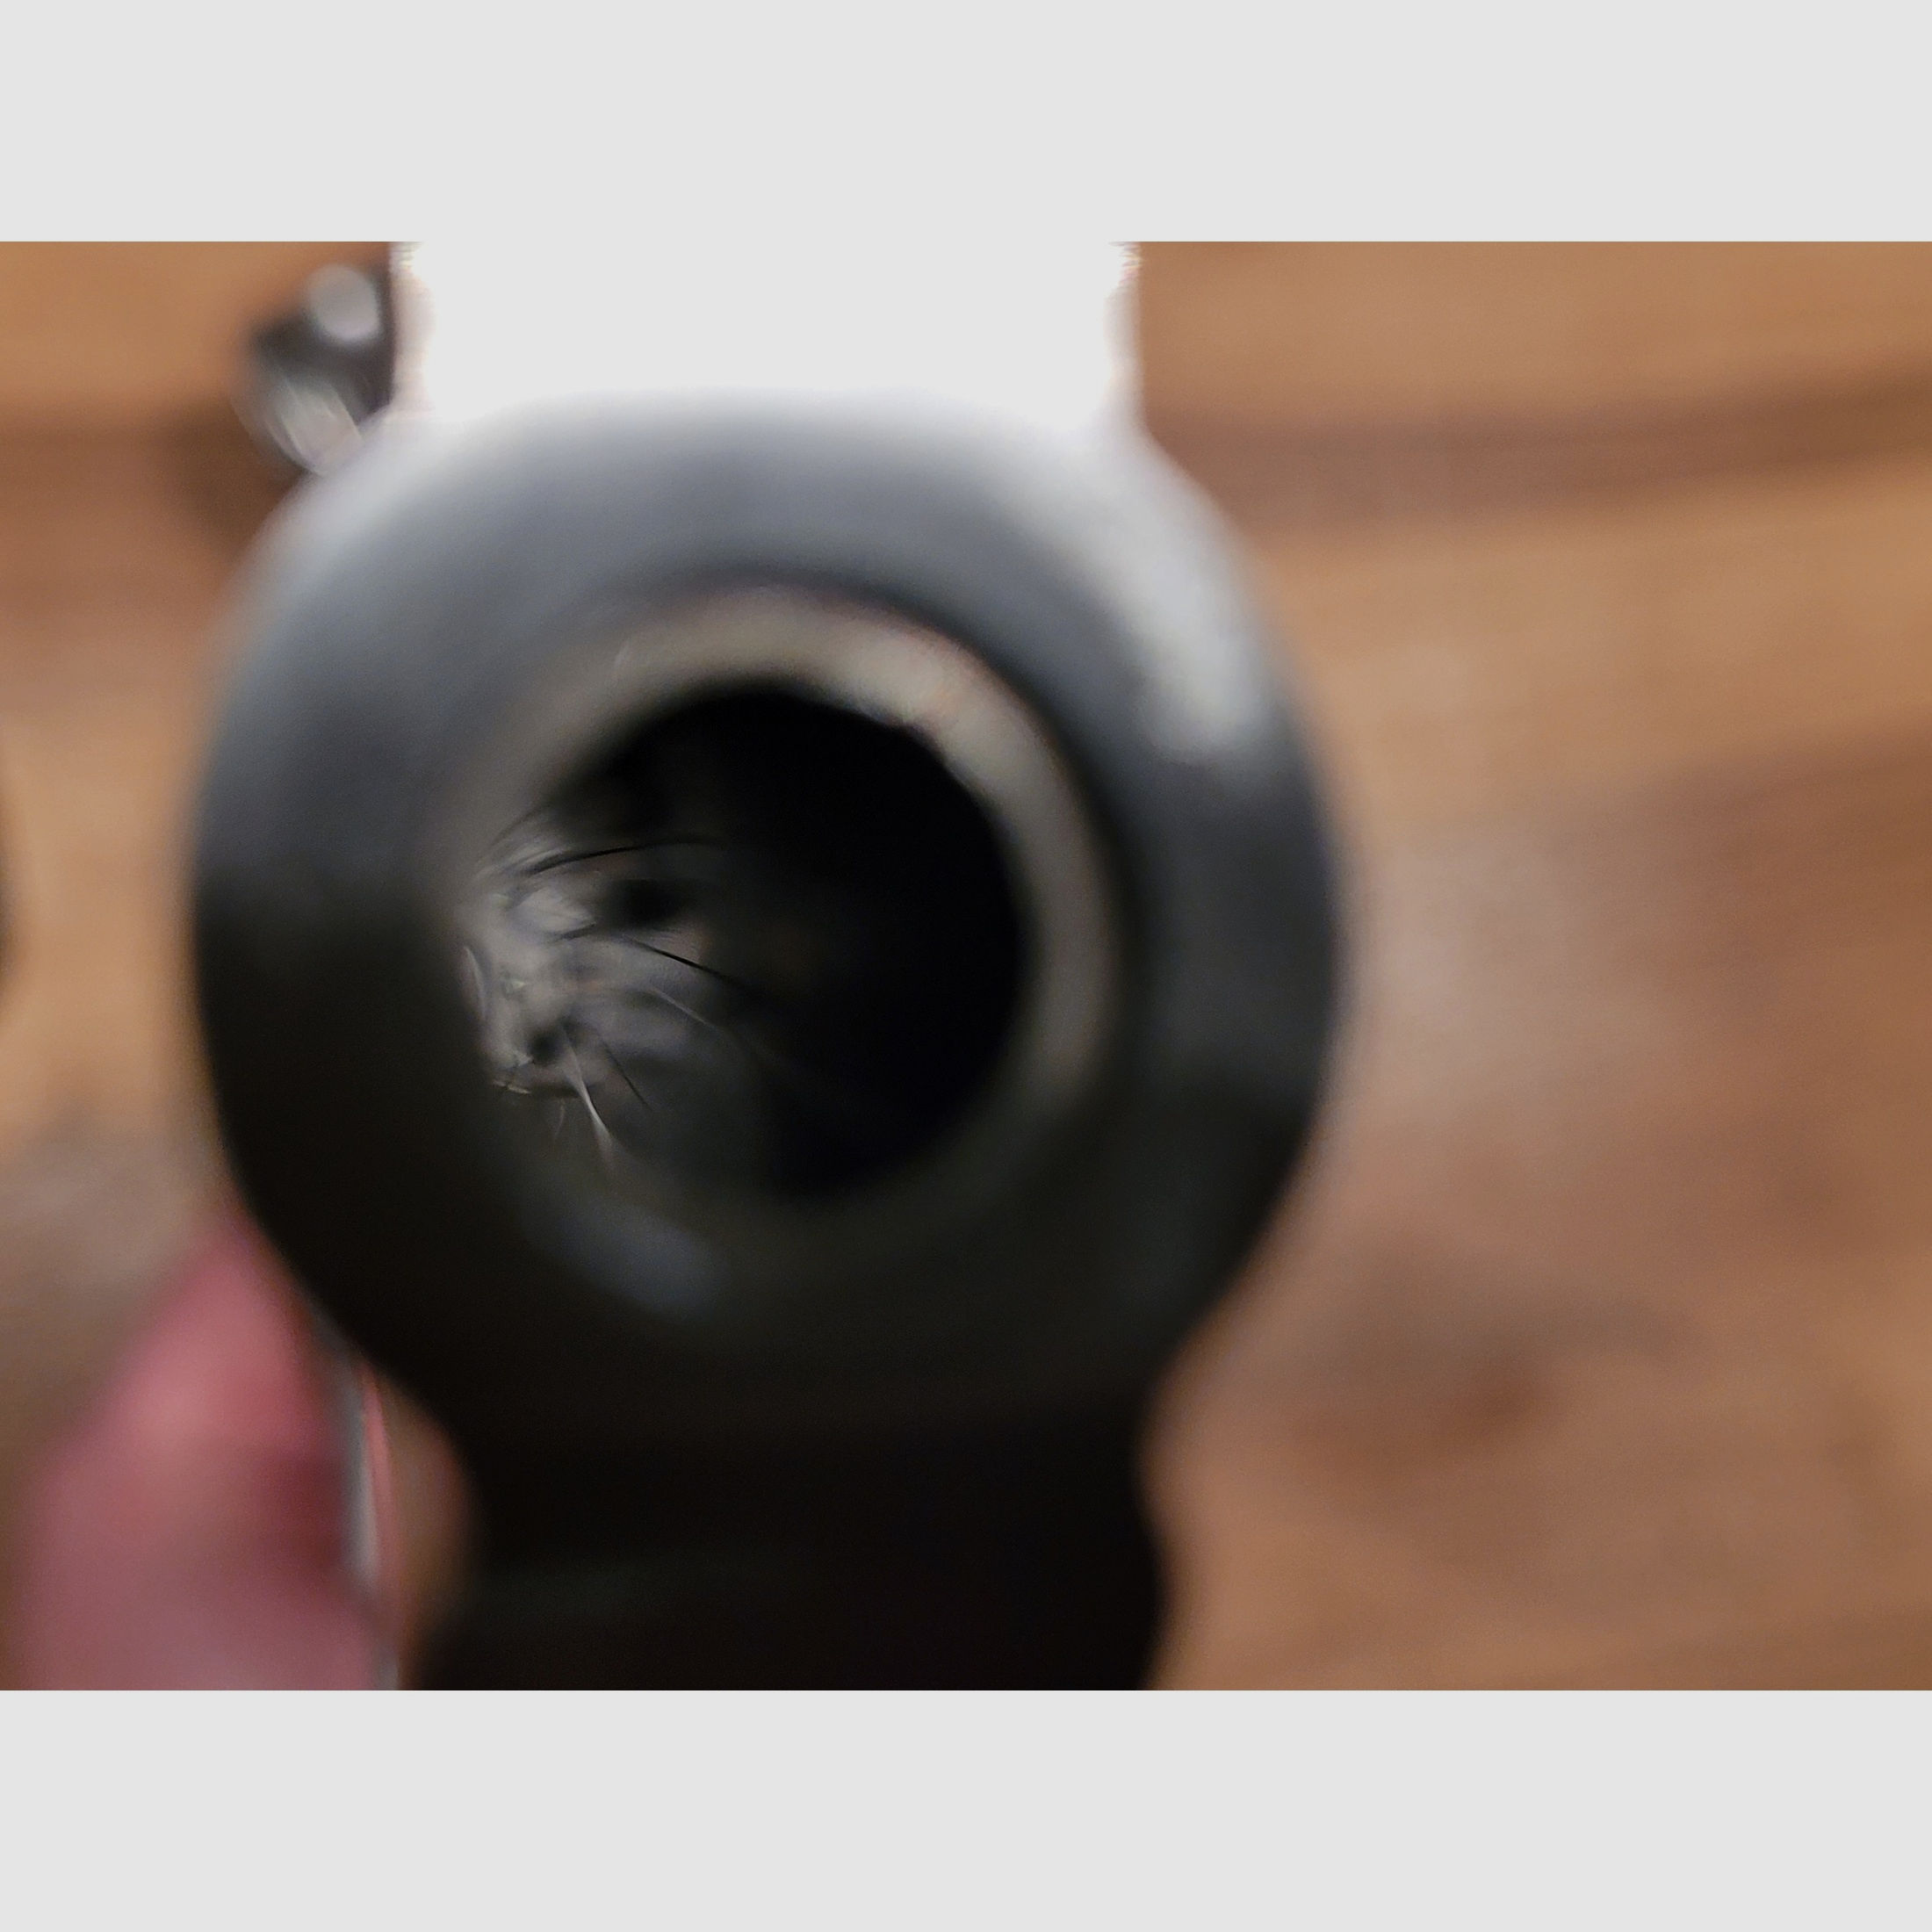 Revolver Colt King Cobra Kaliber .357 Magnum